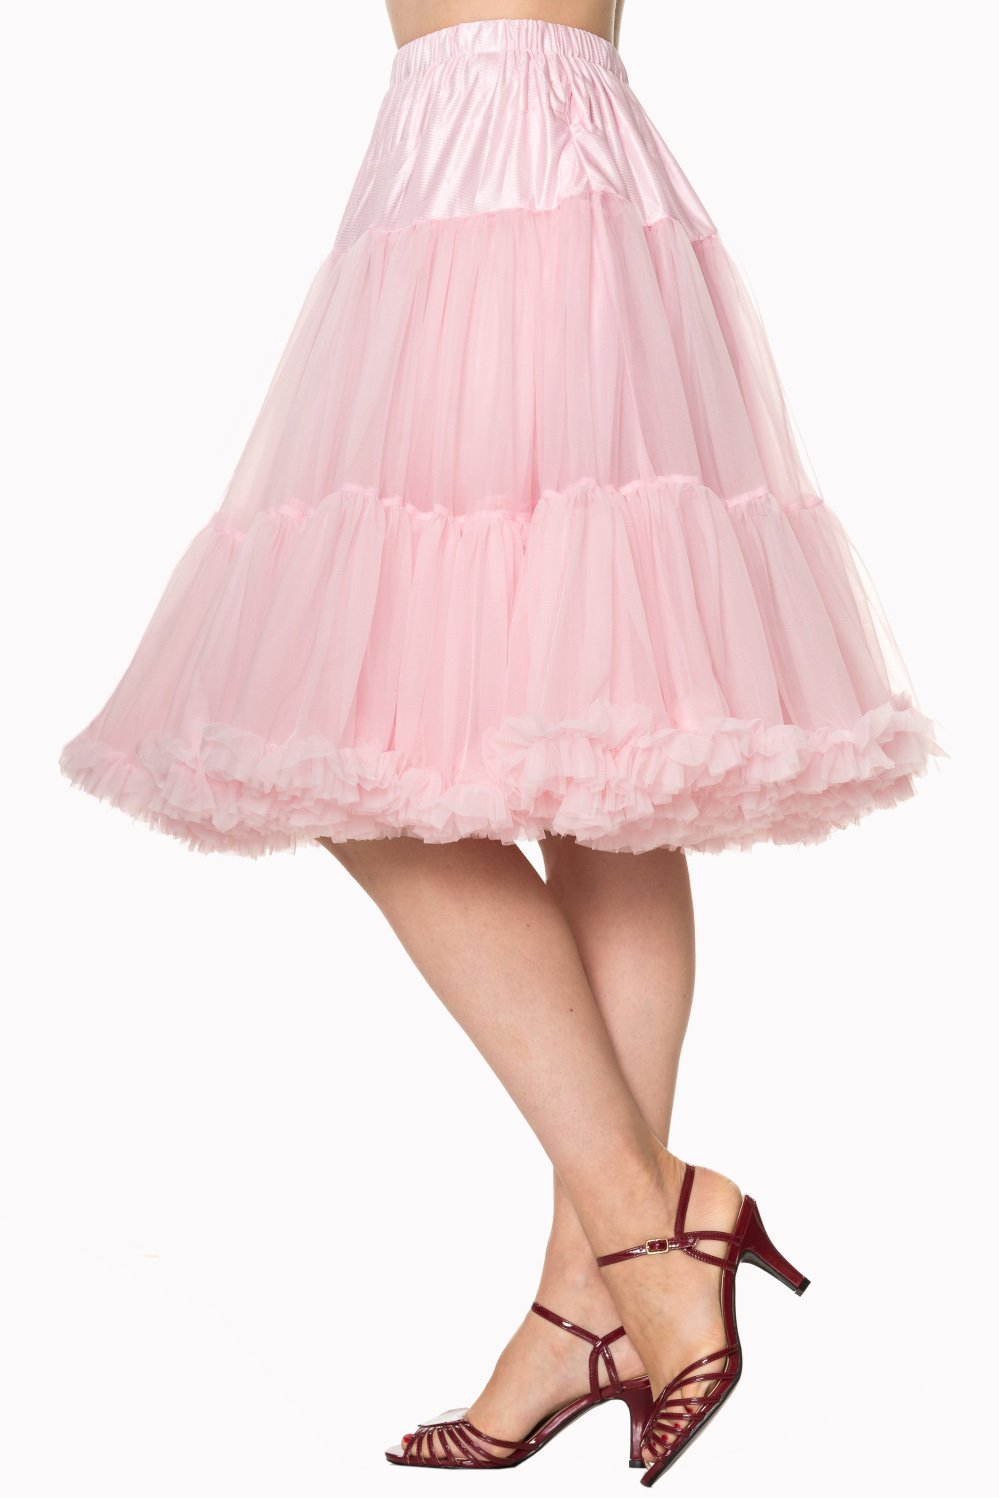 Banned SBN235 Starlite Petticoat Lt Pink